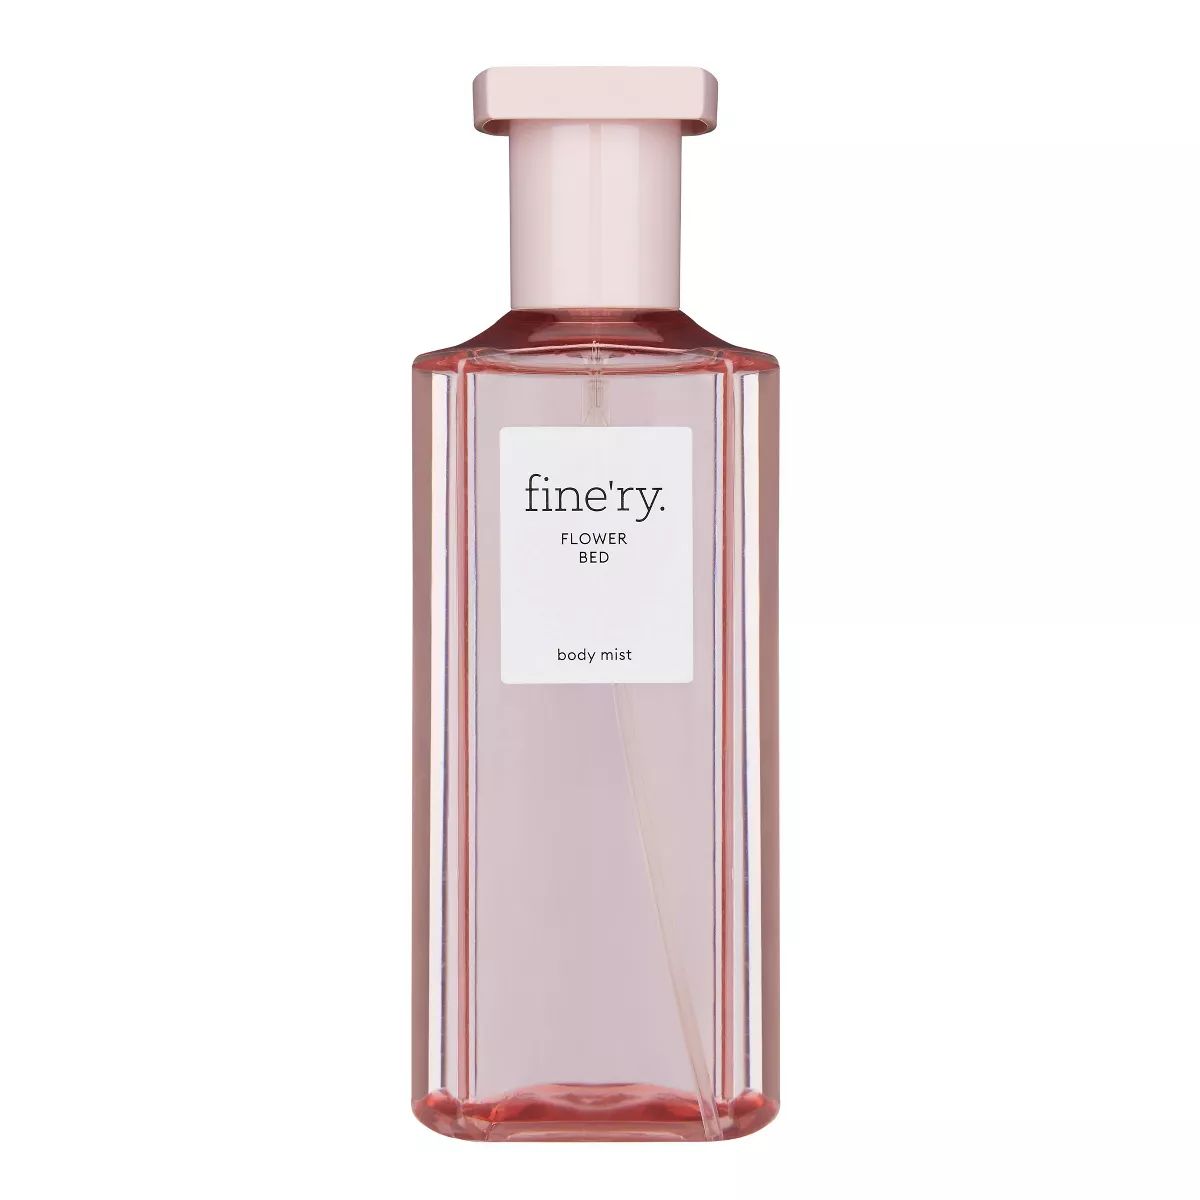 Fine'ry Body Mist Fragrance Spray - Flower Bed - 5 fl oz | Target